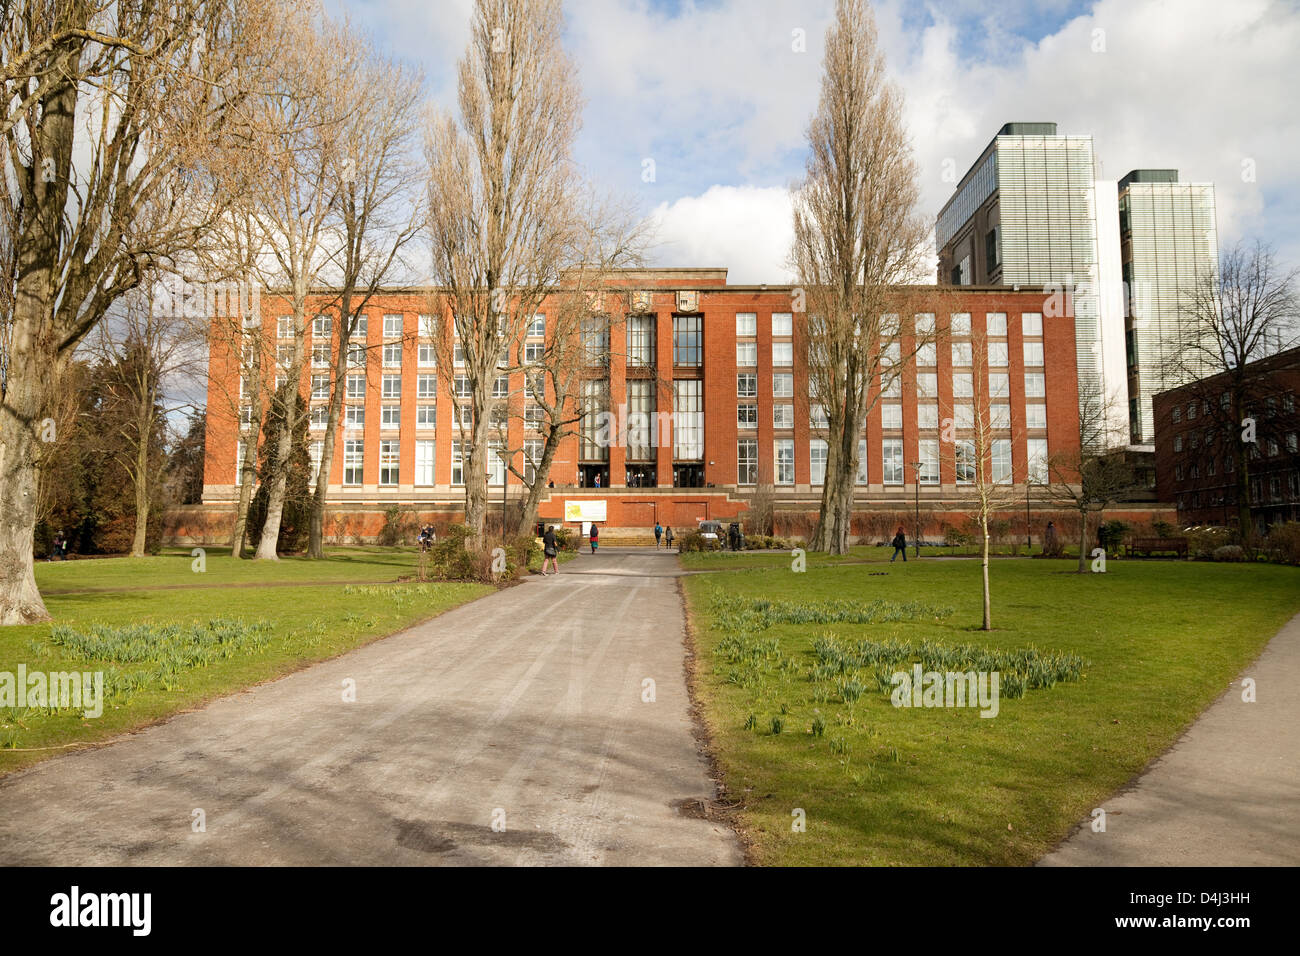 The main university library, Edgbaston campus, Birmingham University library building, UK Stock Photo